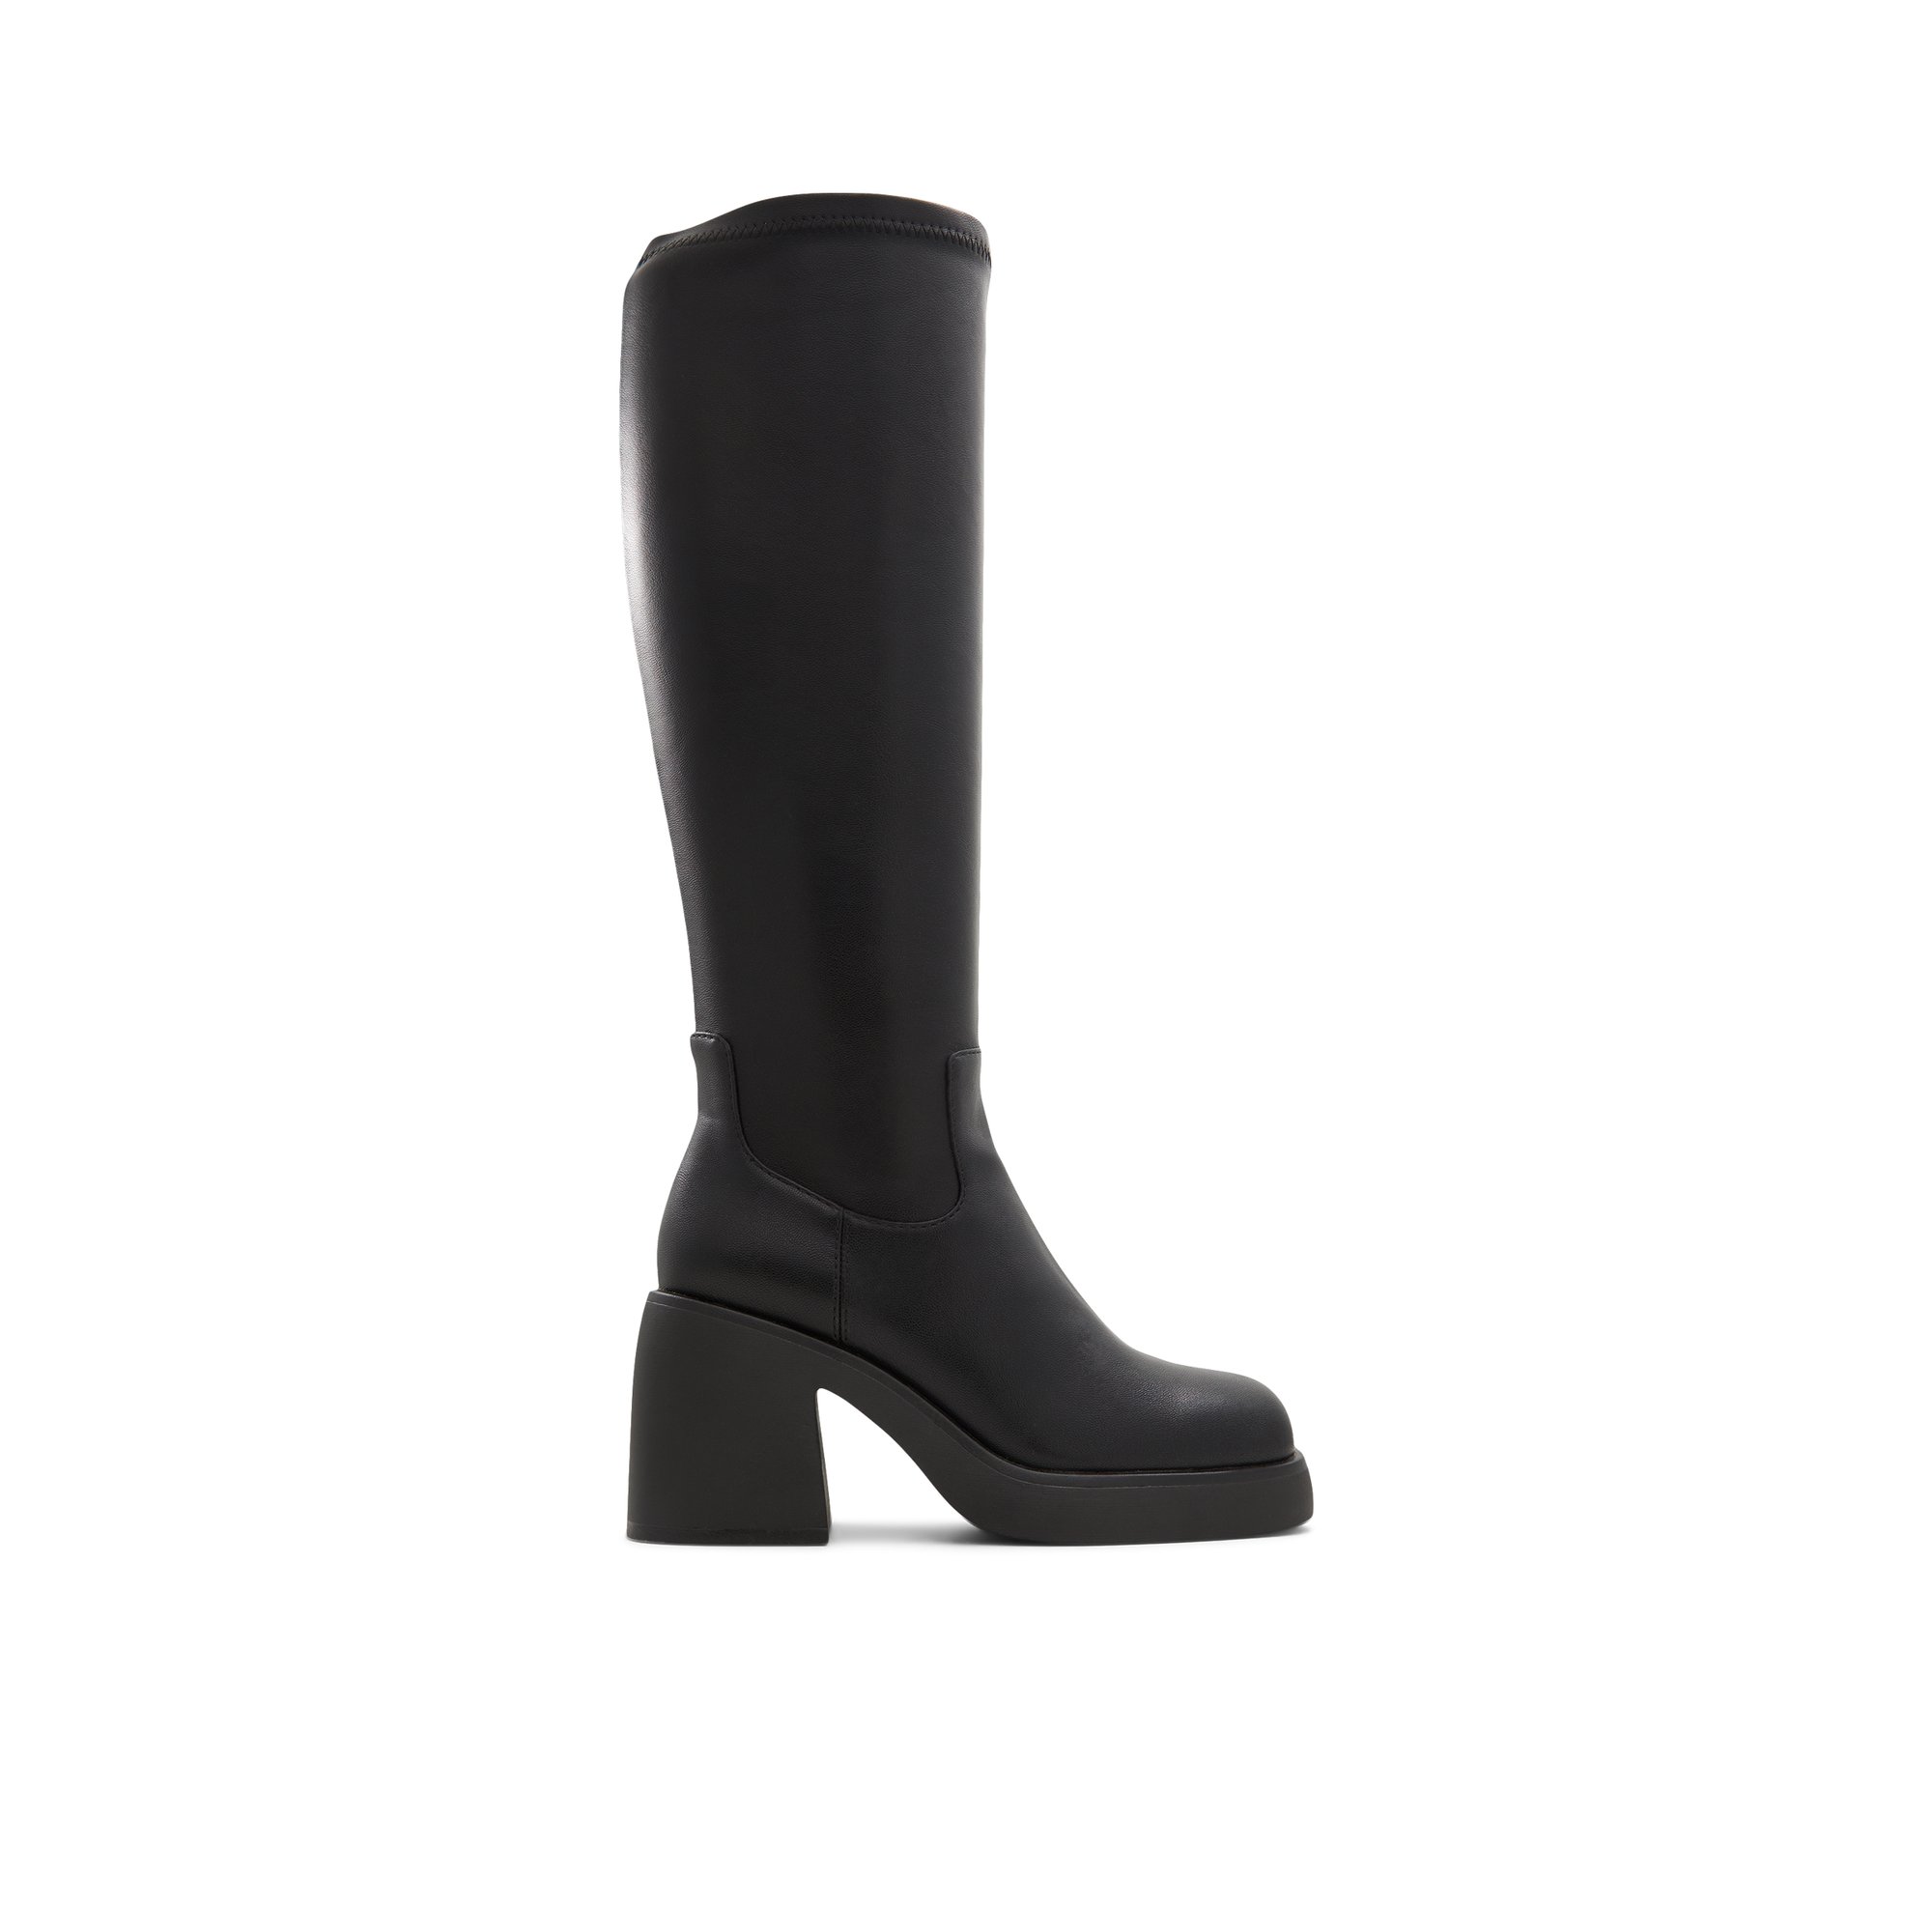 ALDO Auster - Women's Boots Tall - Black